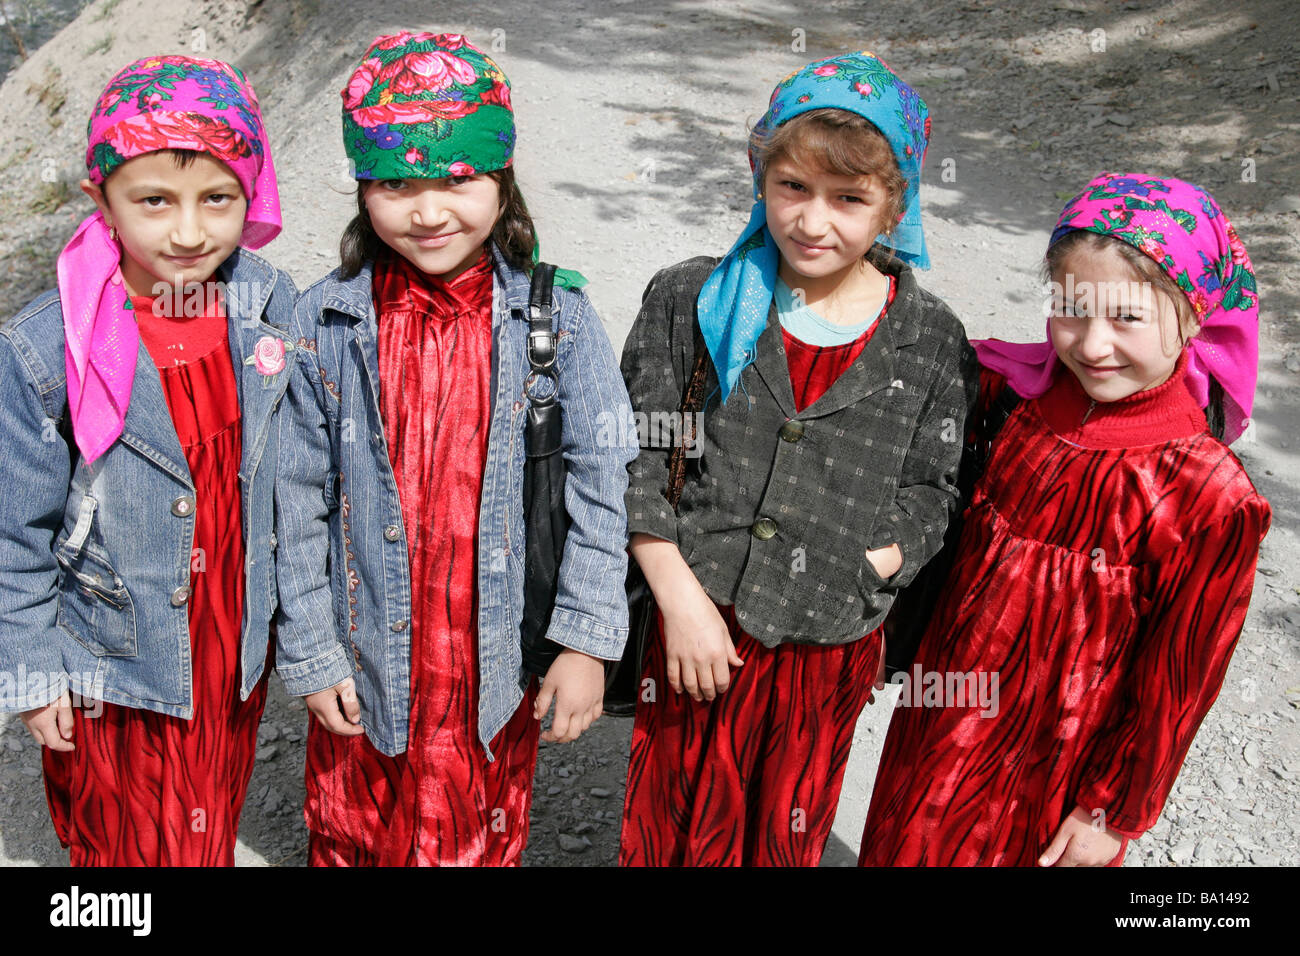 Tajik girls wearing traditional dresses and headscarf, Marguzor Lakes, Fan Mountain, Tajikistan, Central Asia Stock Photo